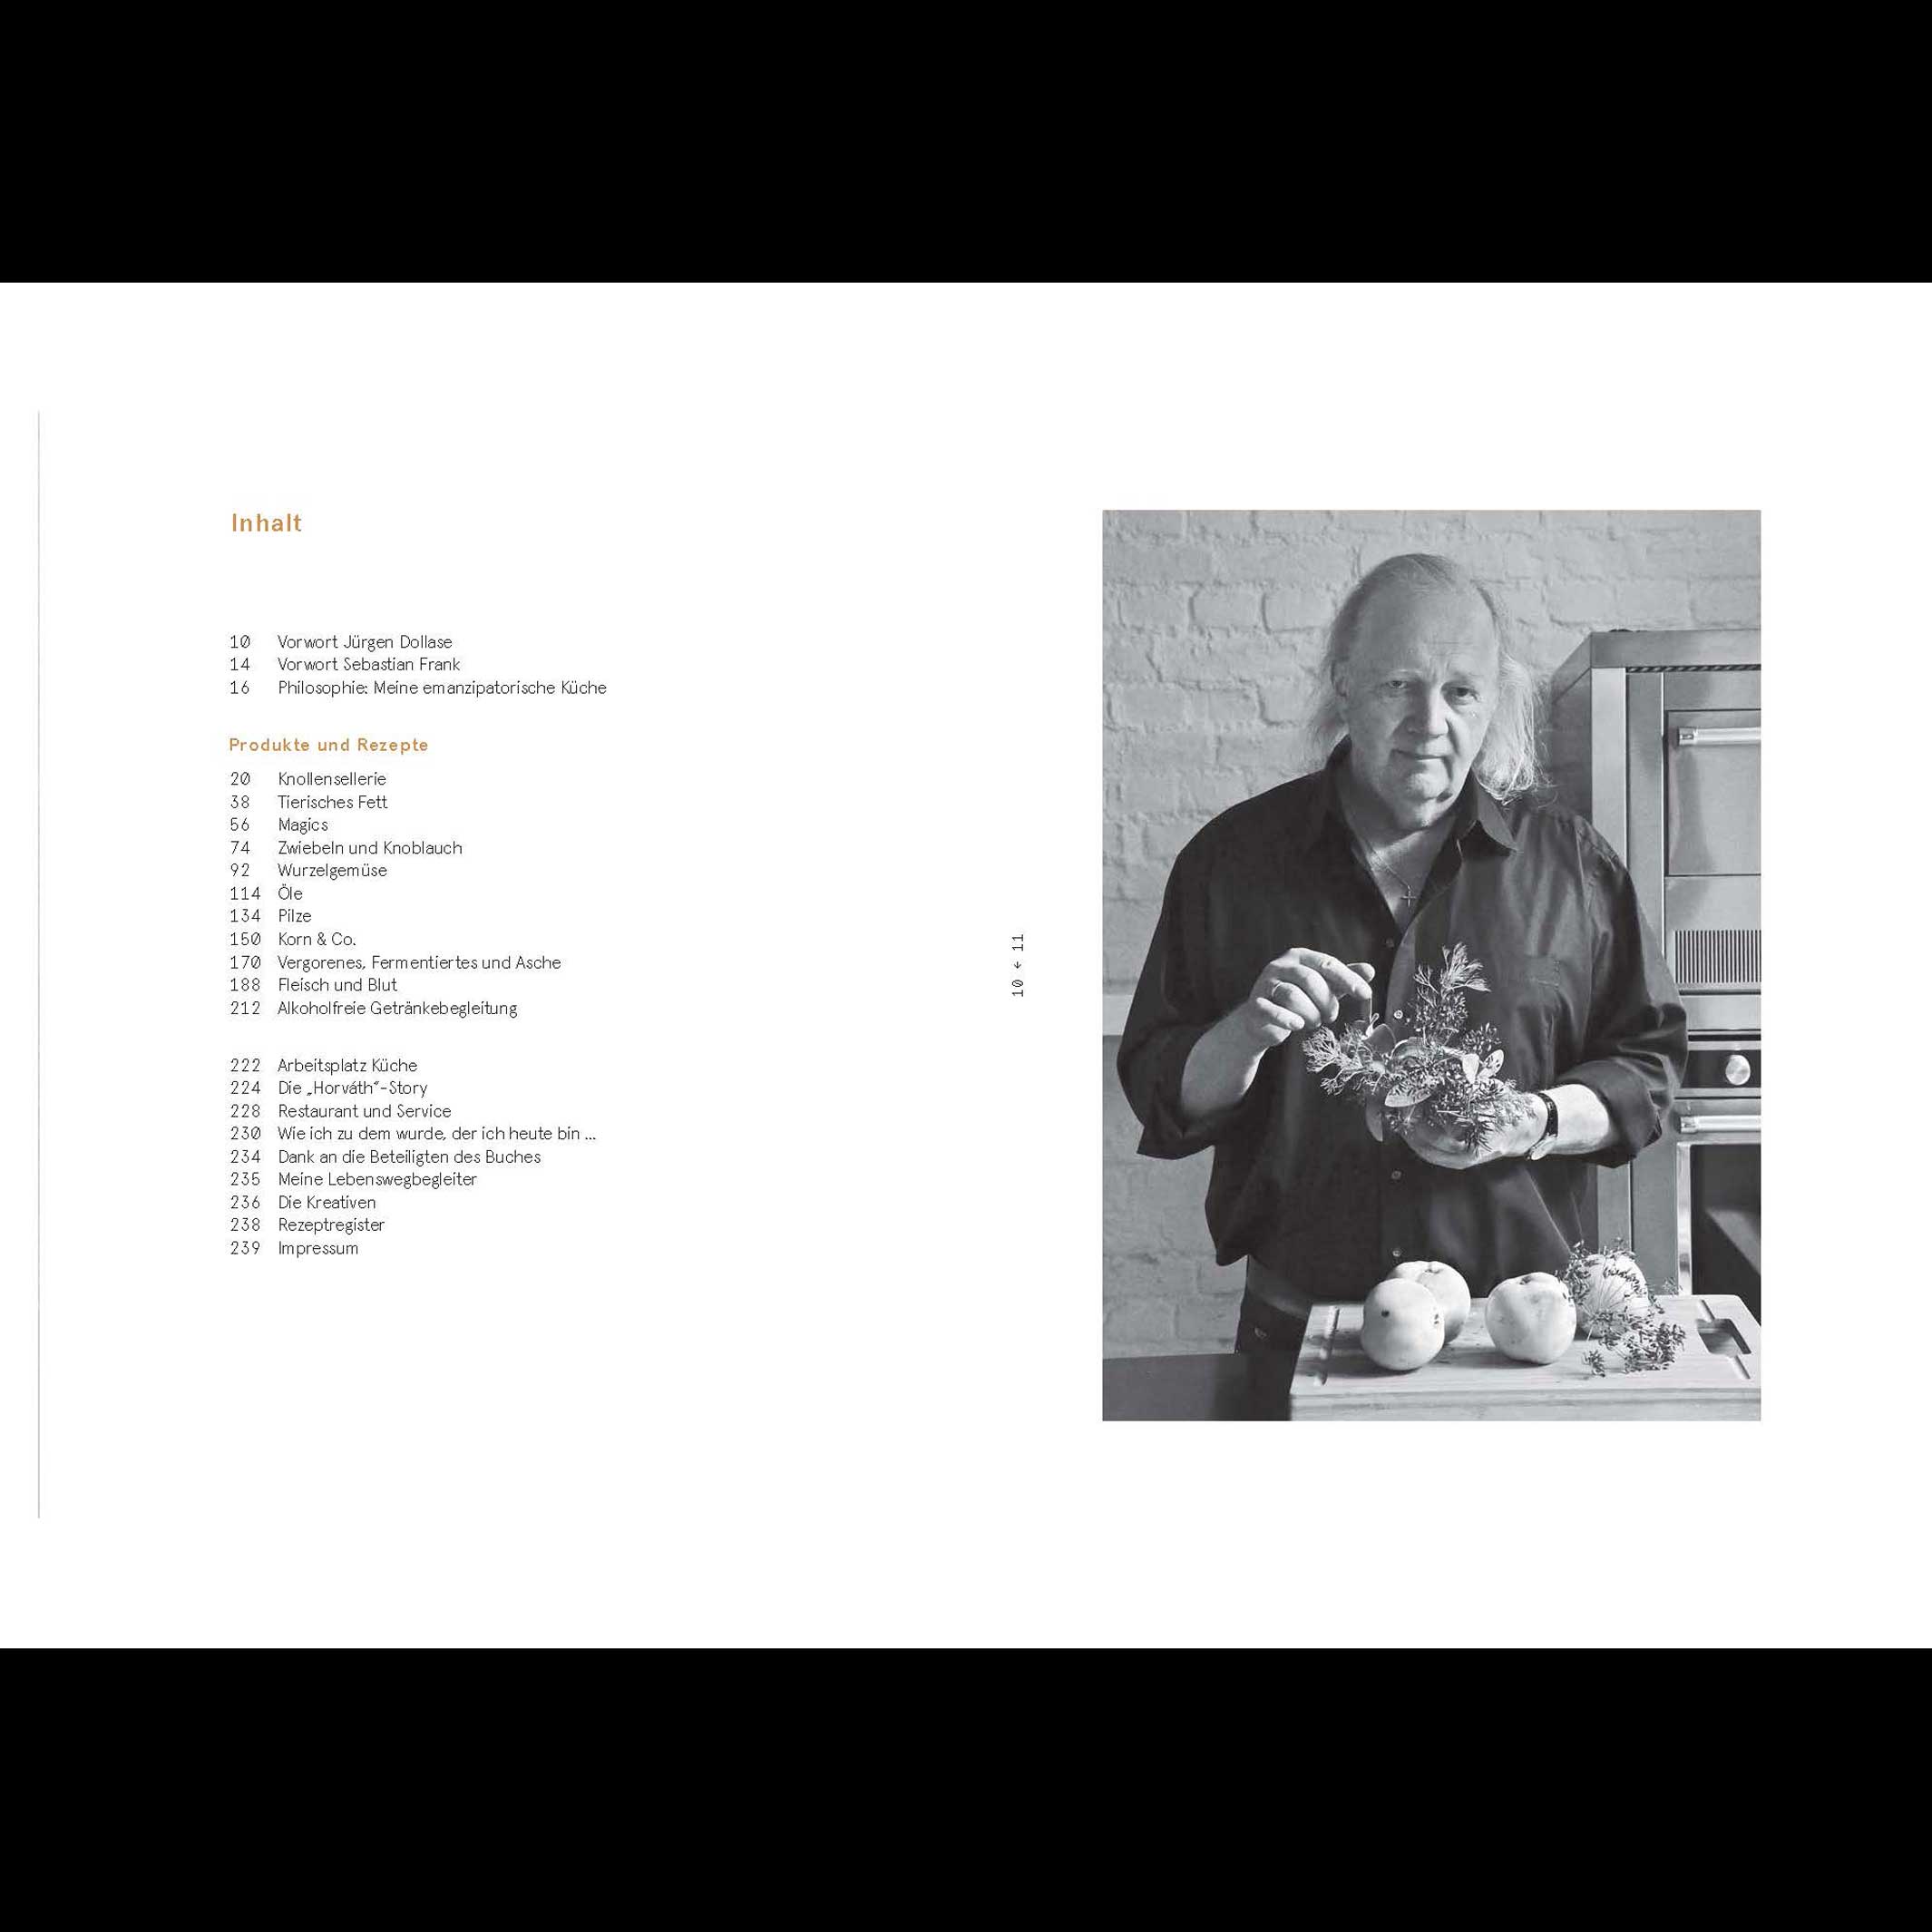 kuk [cook] | COOK BOOK by Sebastian Frank  | DK Verlag